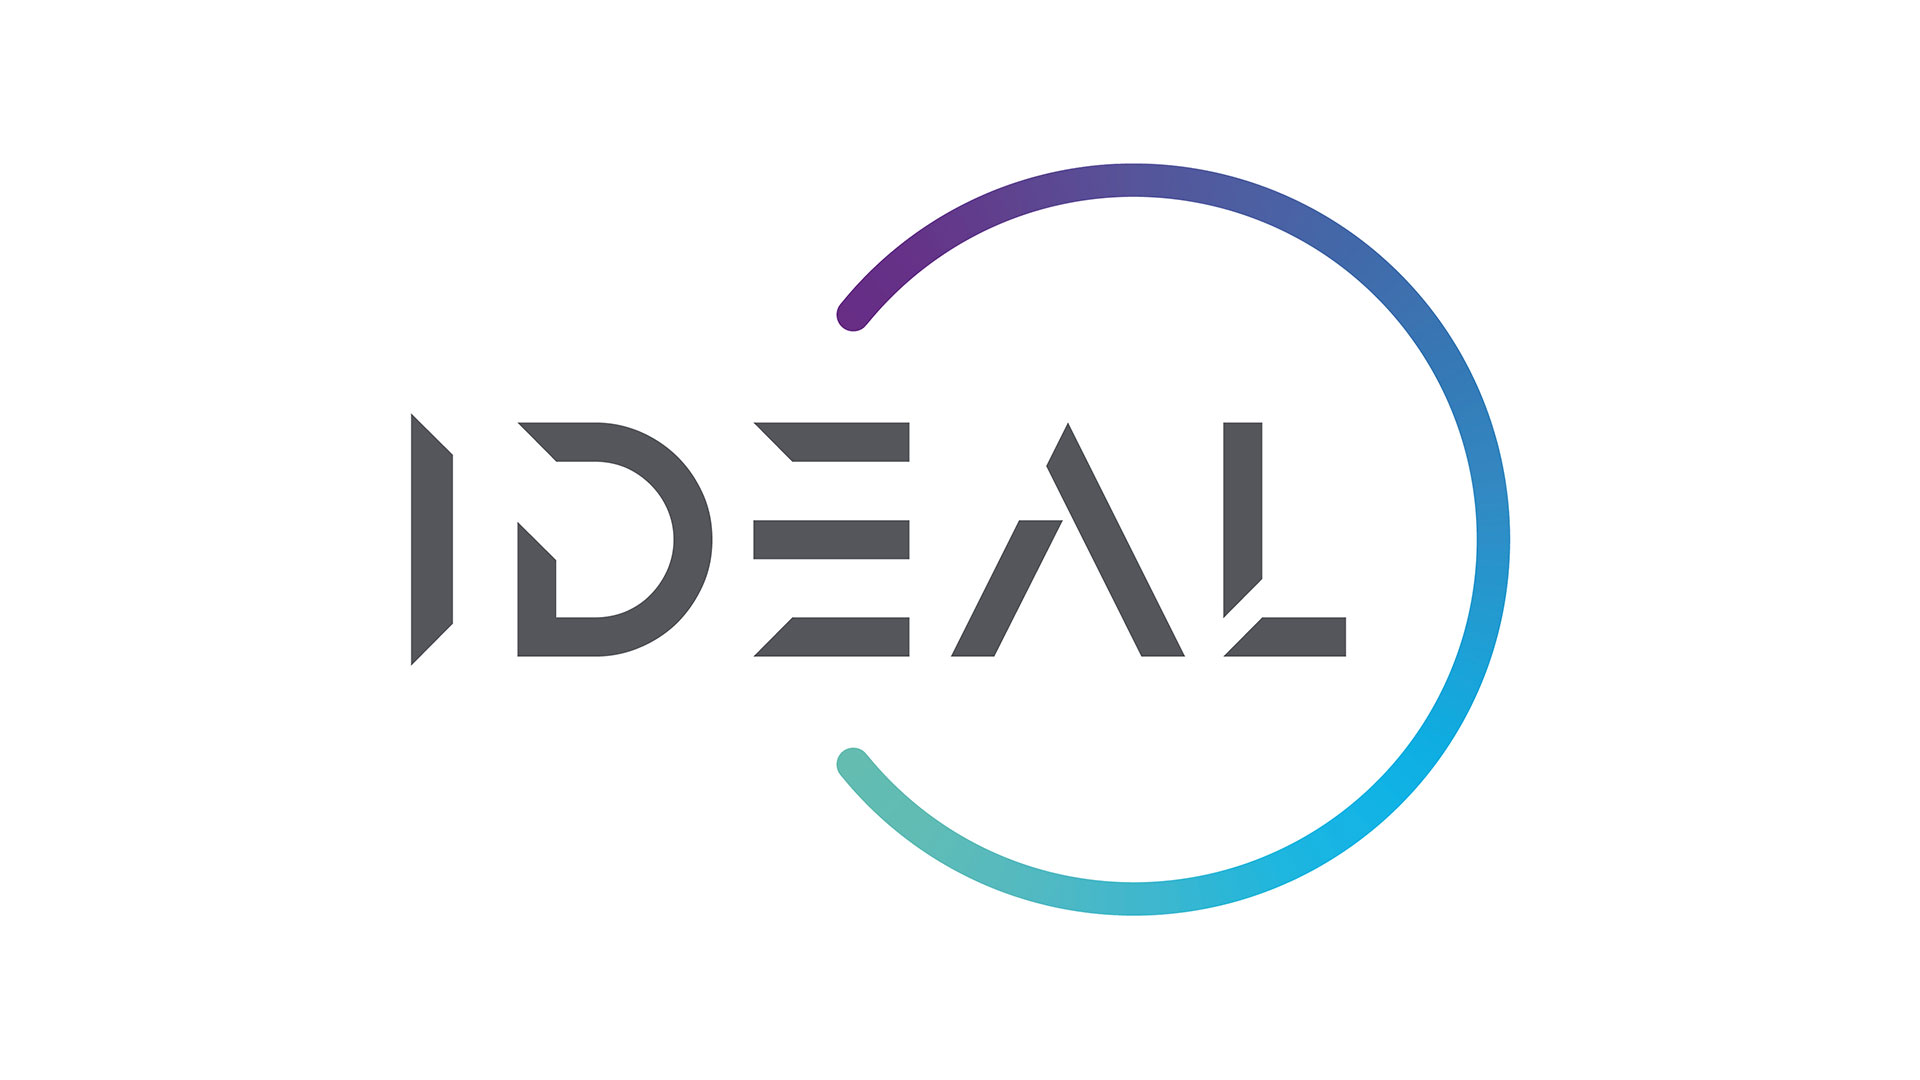 File:Ideal TV logo.svg - Wikipedia